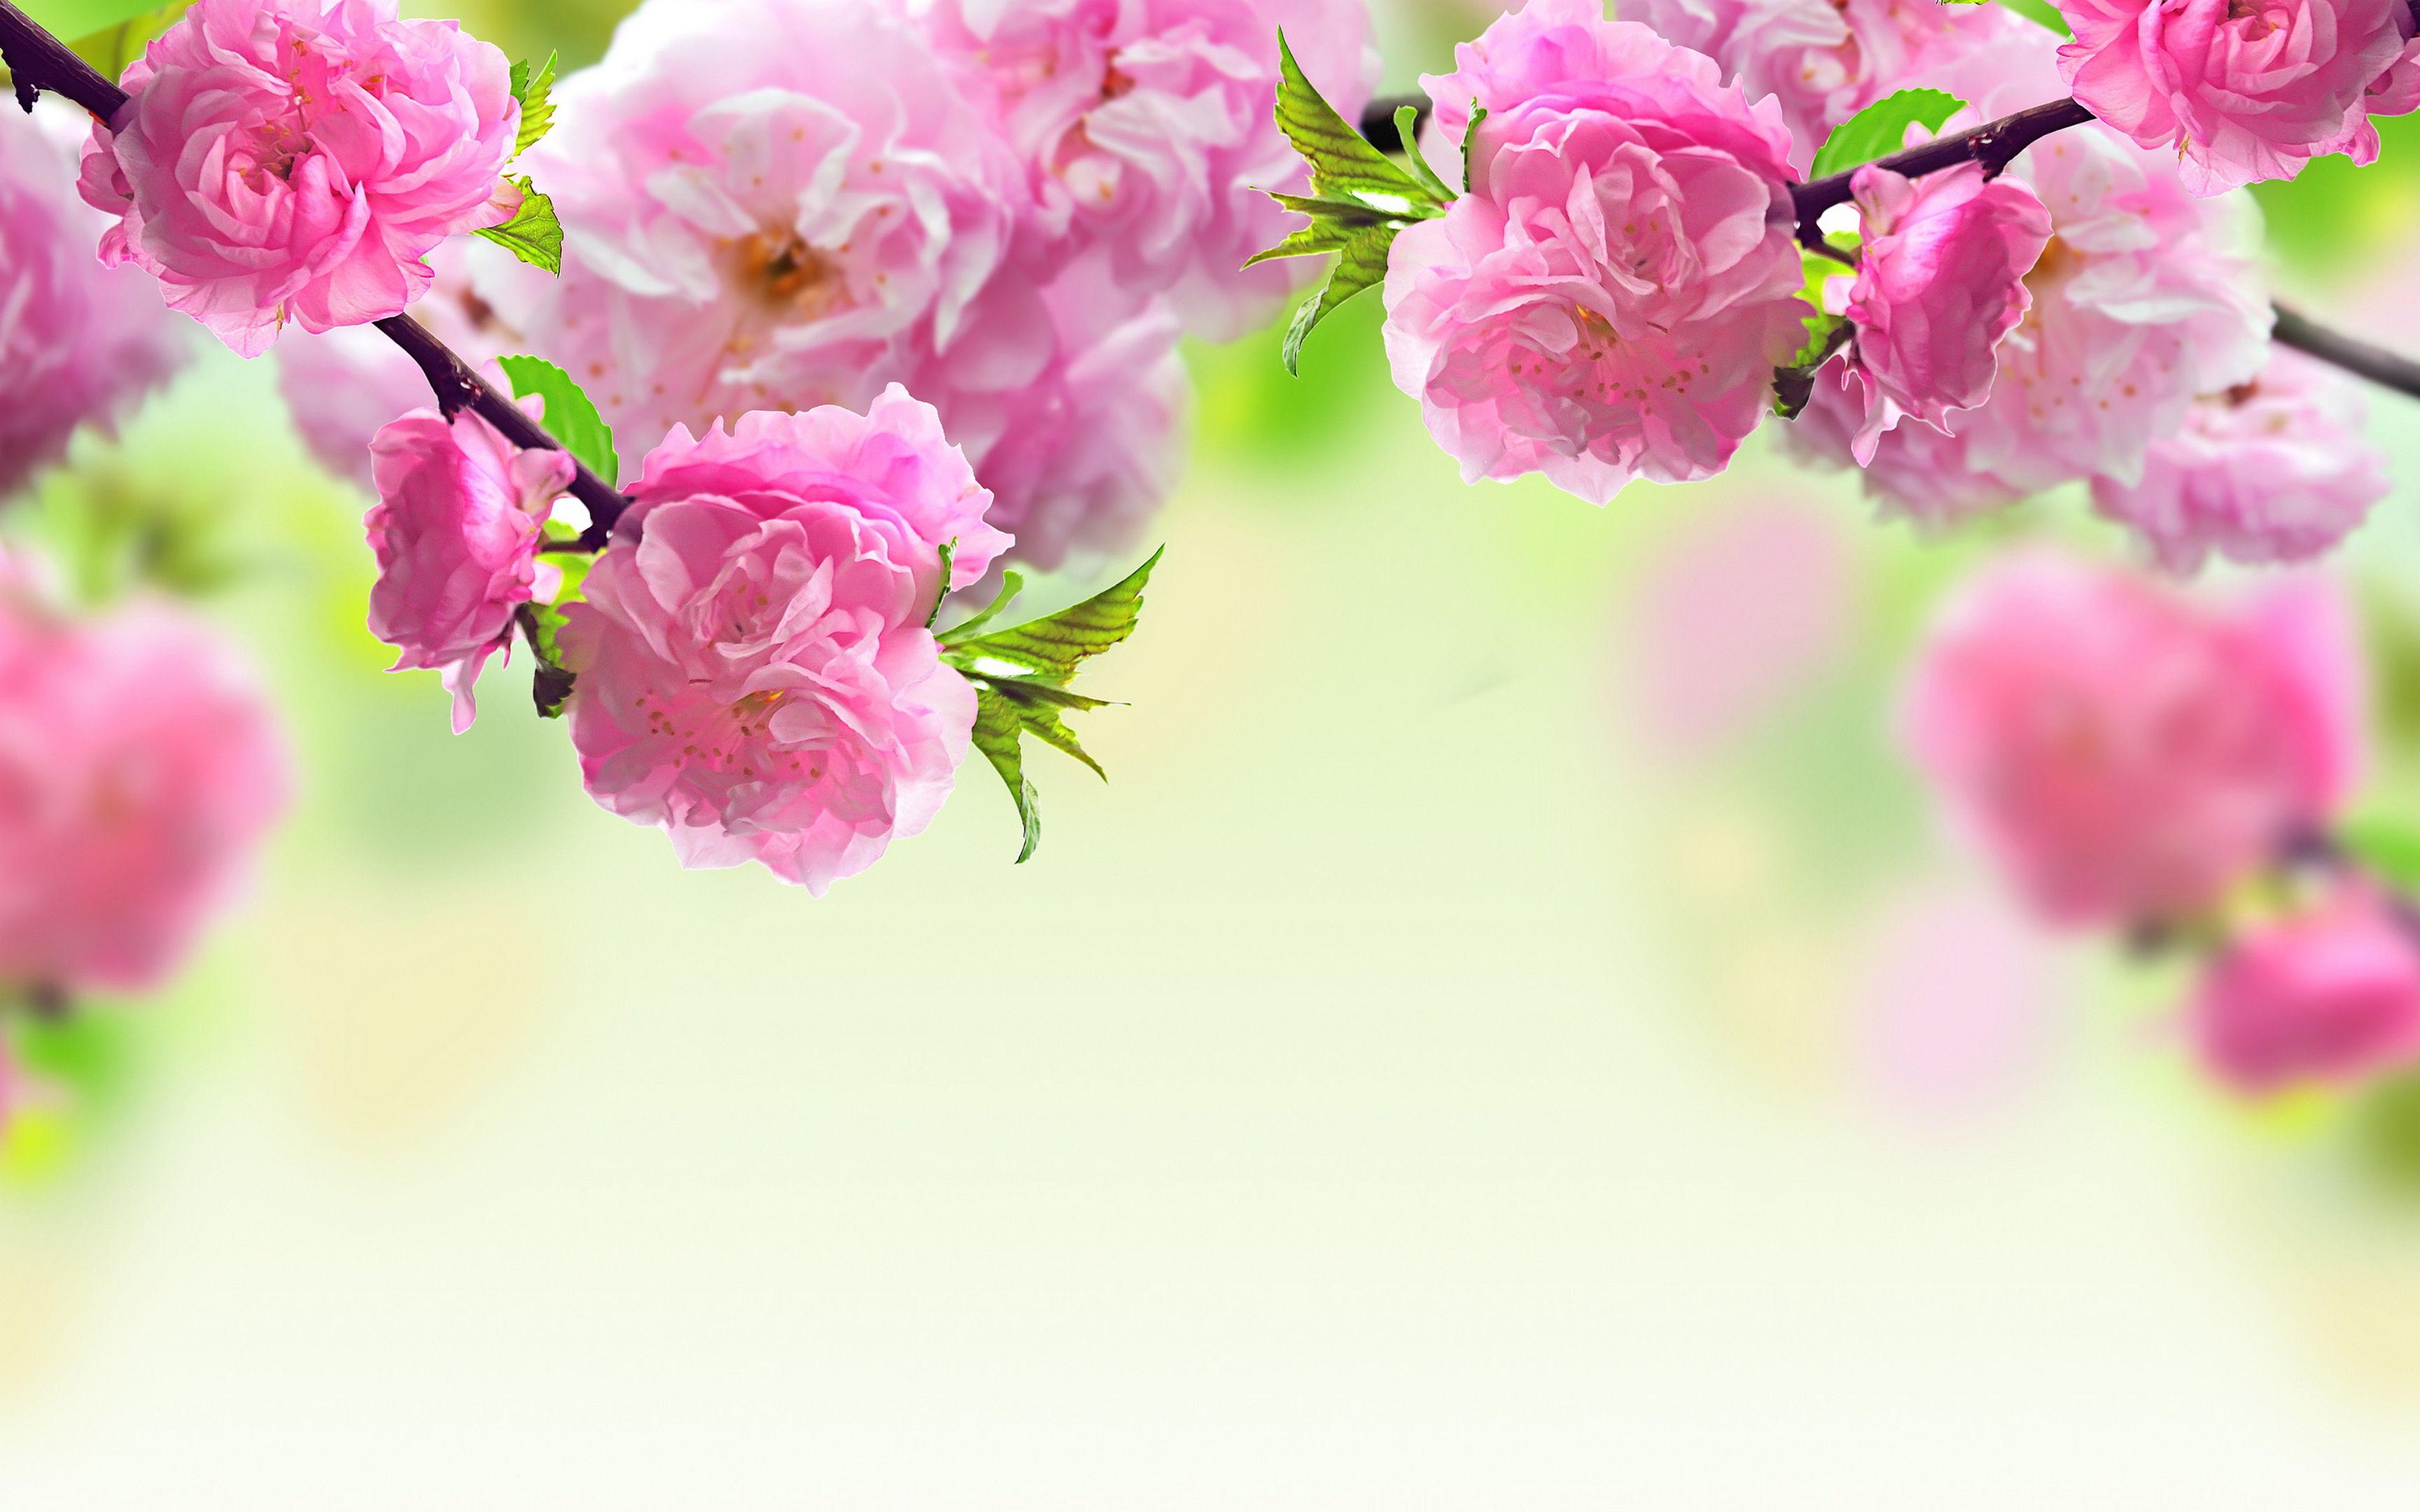 Spring Background. Spring flowers wallpaper, Spring flowers background, Pink spring flowers